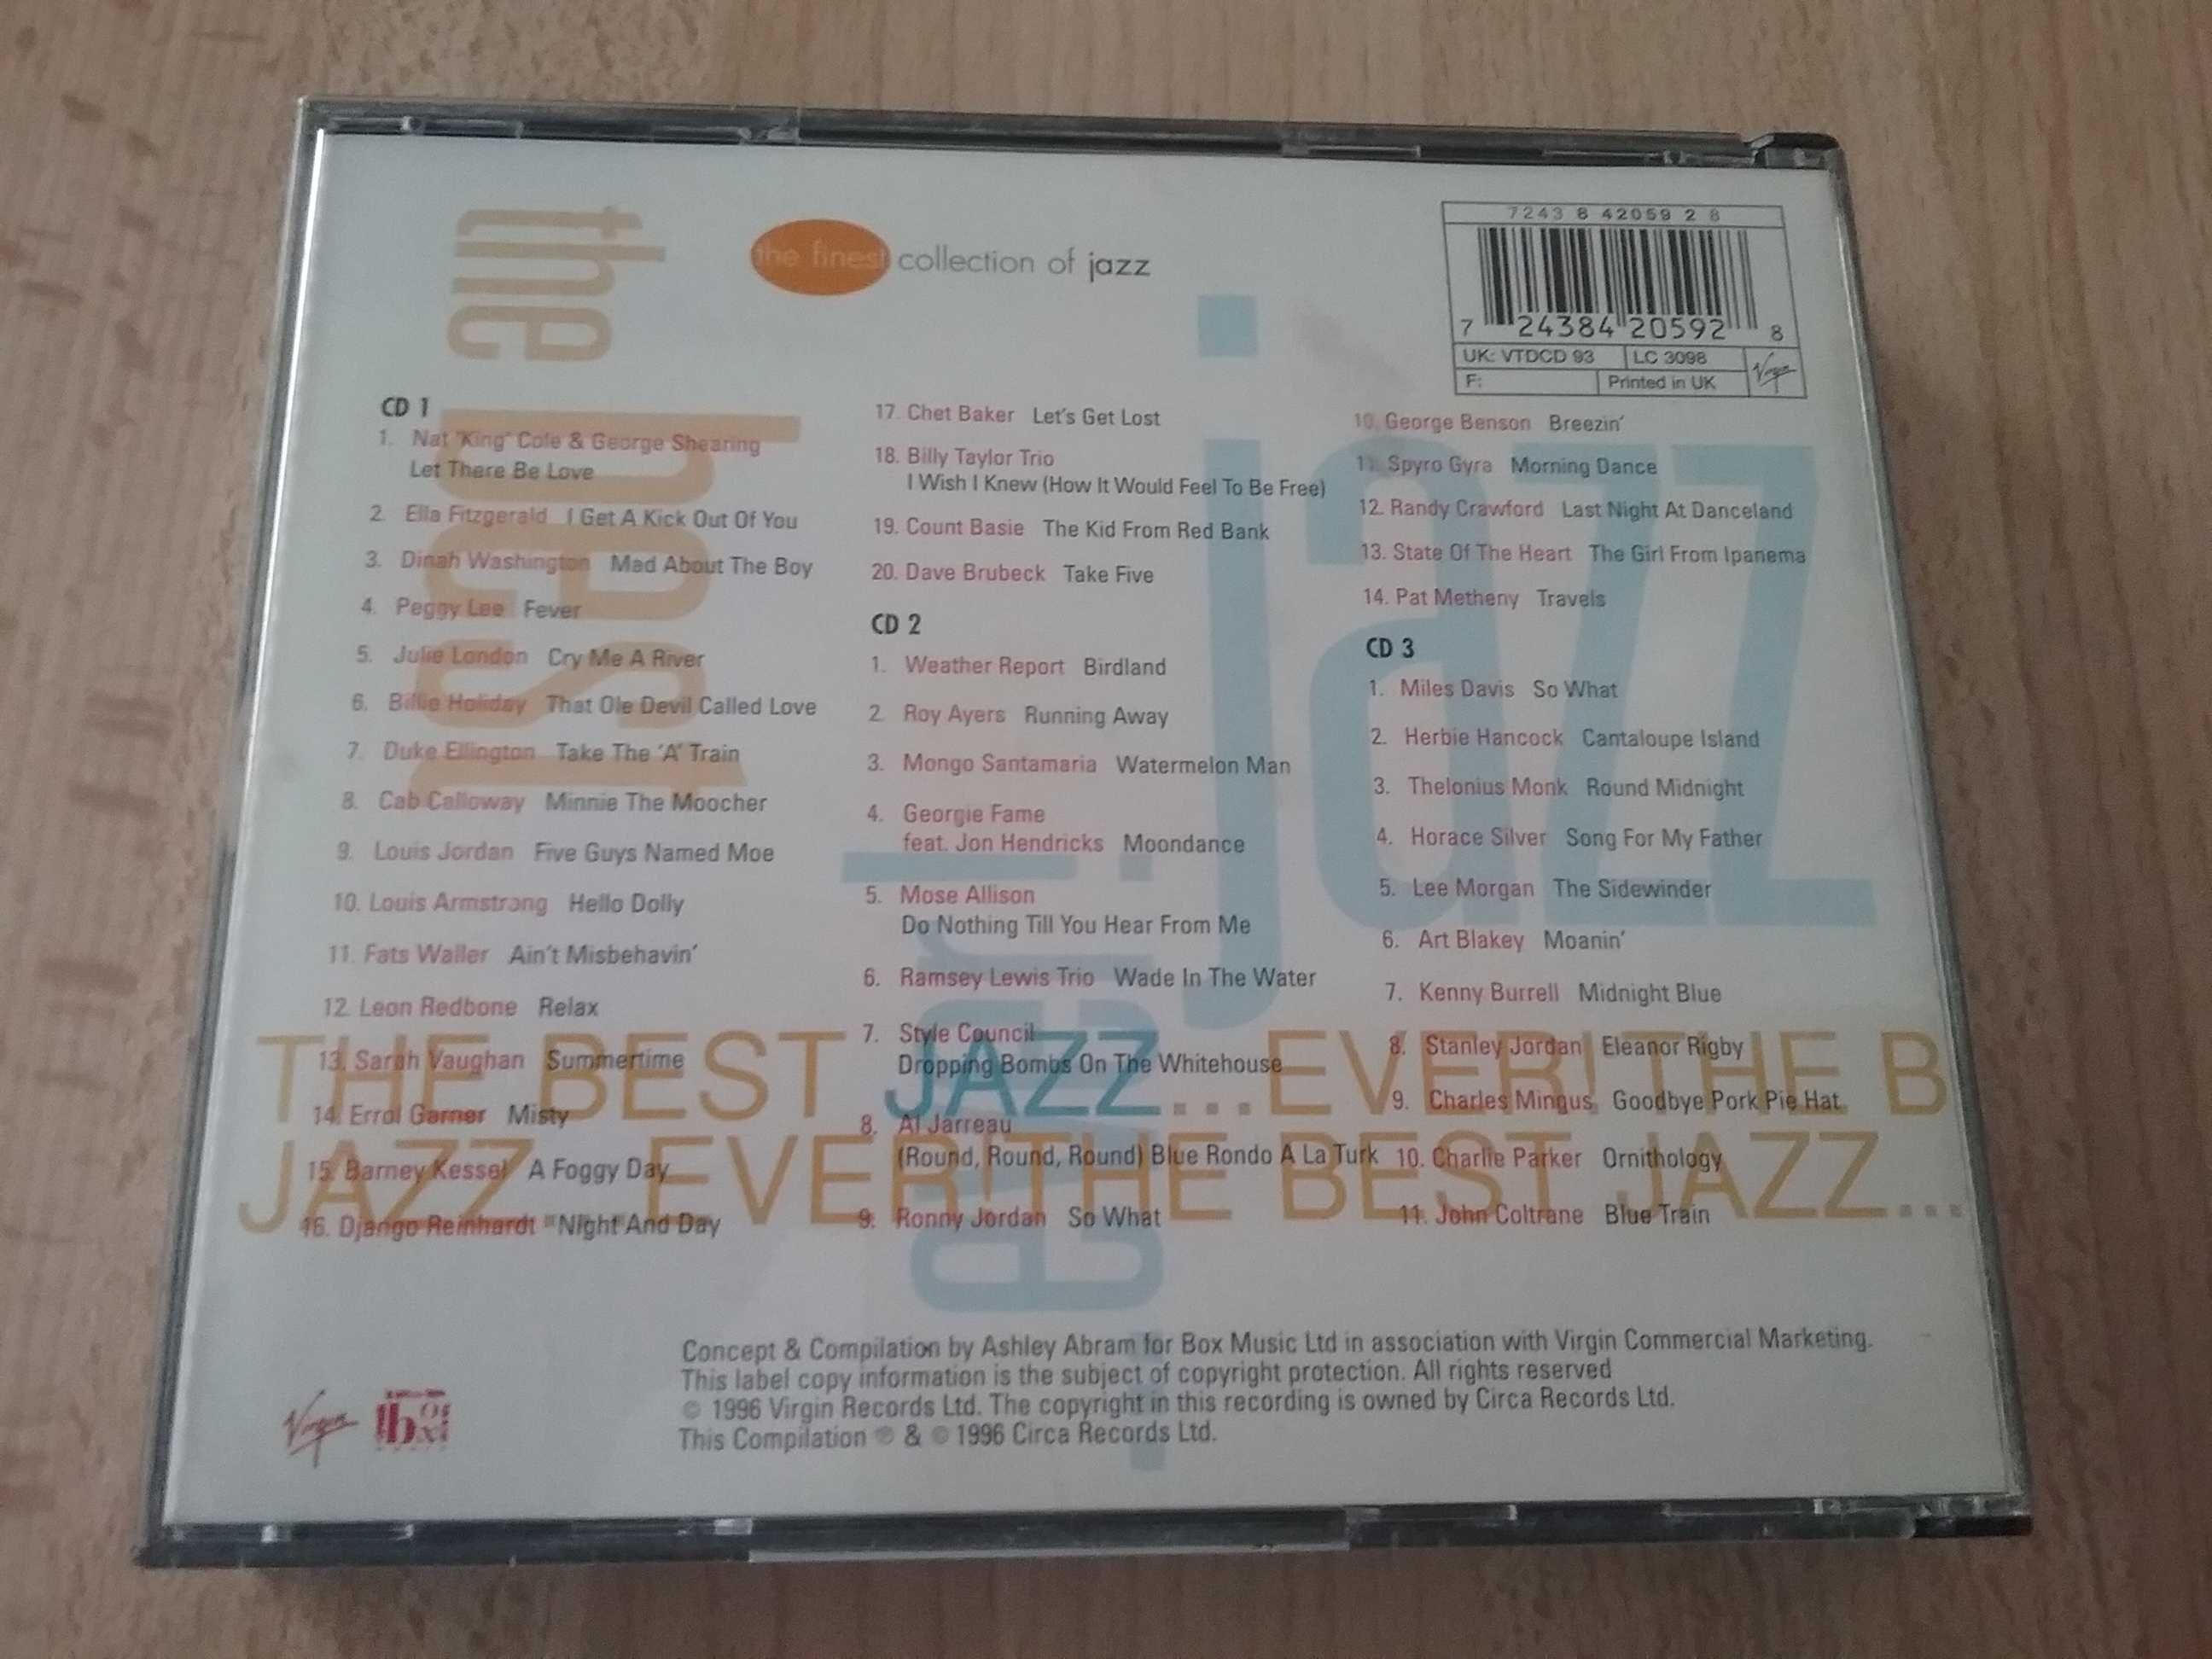 The best Jazz Ever 3 CD música